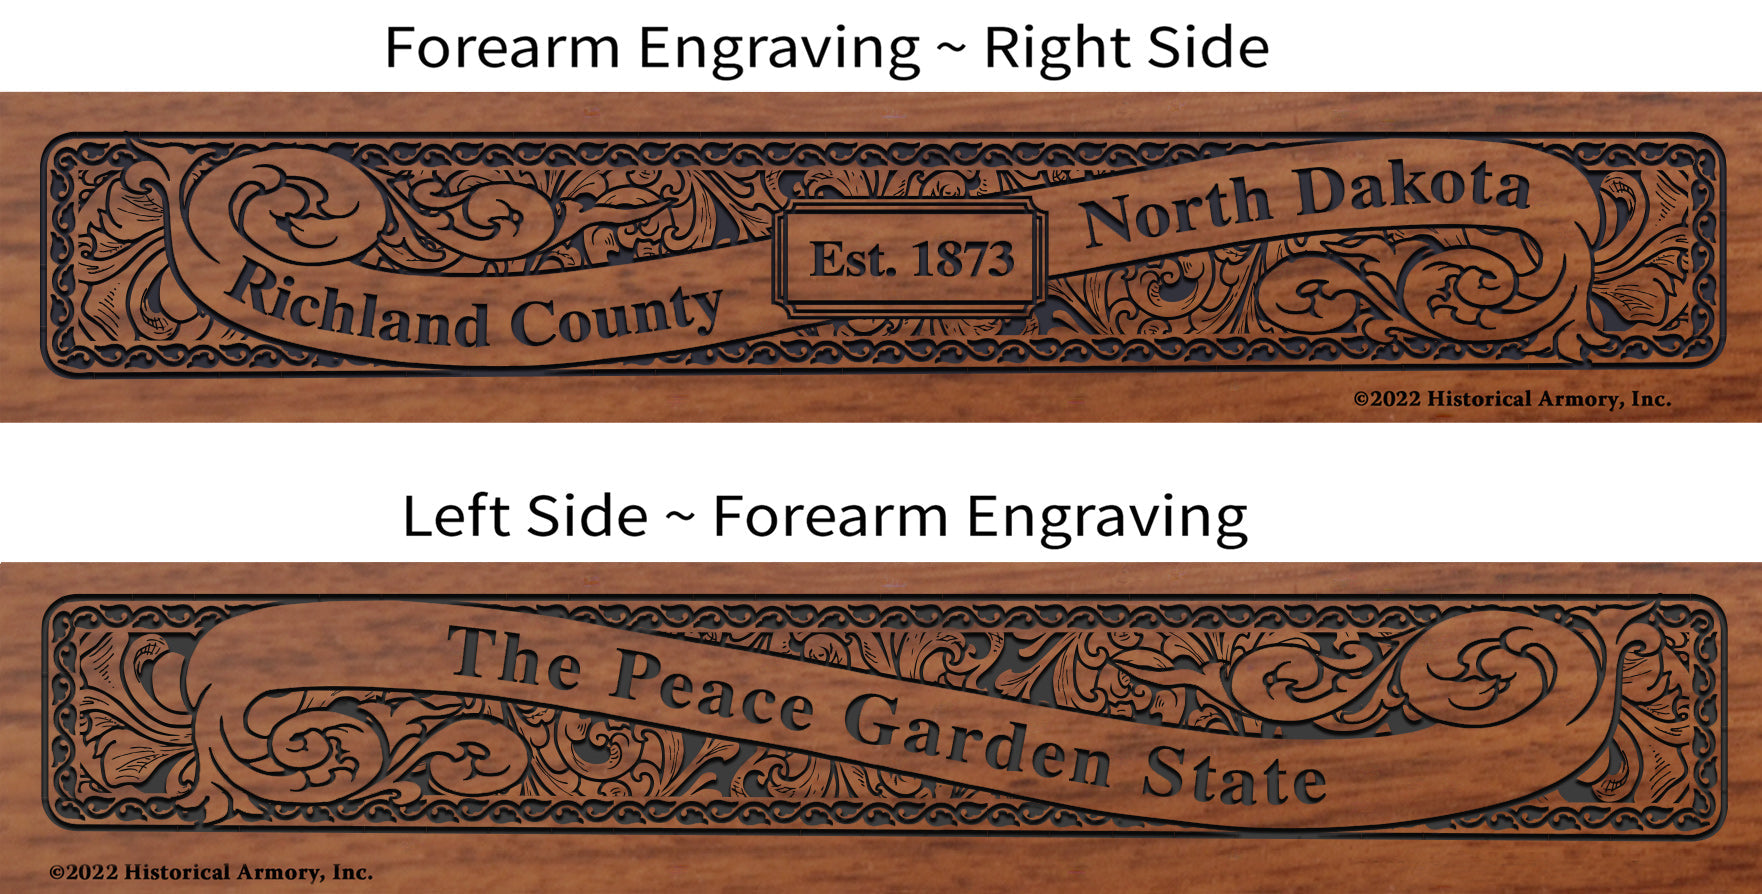 Richland County North Dakota Engraved Rifle Forearm